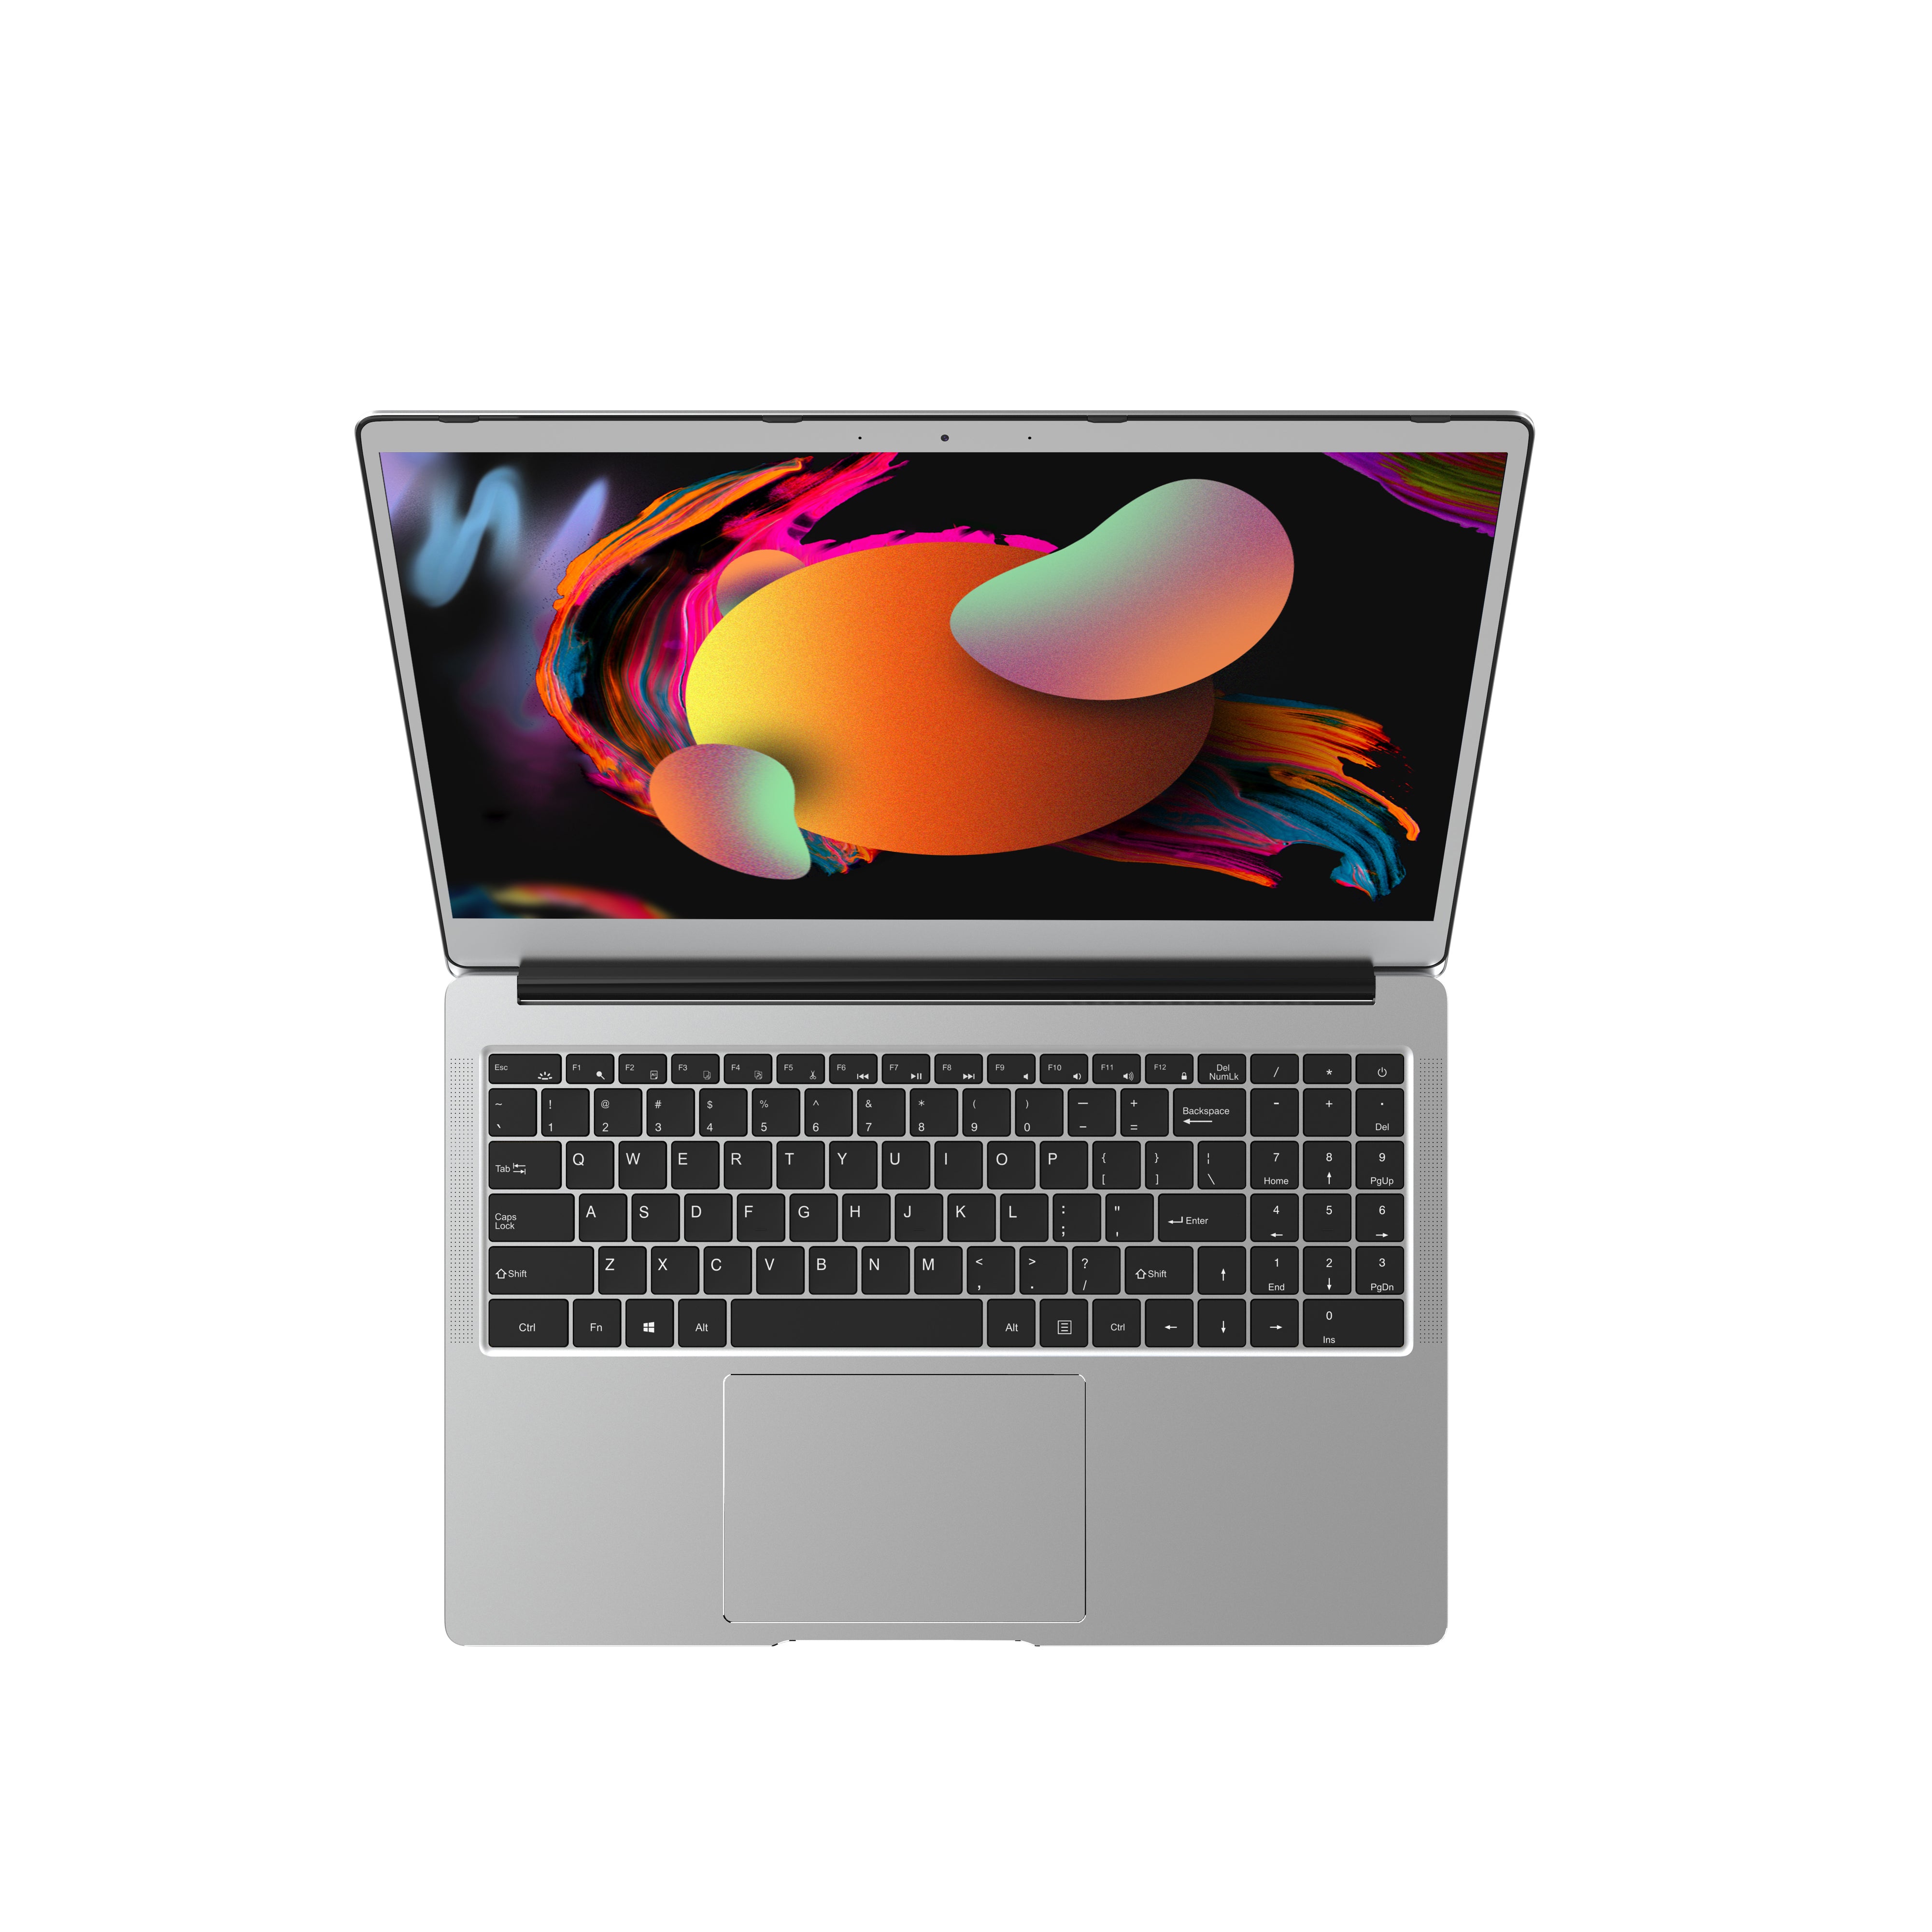 14 inch Laptop FHD IPS Display Notebook, KX-6640MA 64-bit Quad-Core , 8GB RAM, 256GB NVMe SSD, WiFi, HDMI, Windows 10 , Sliver